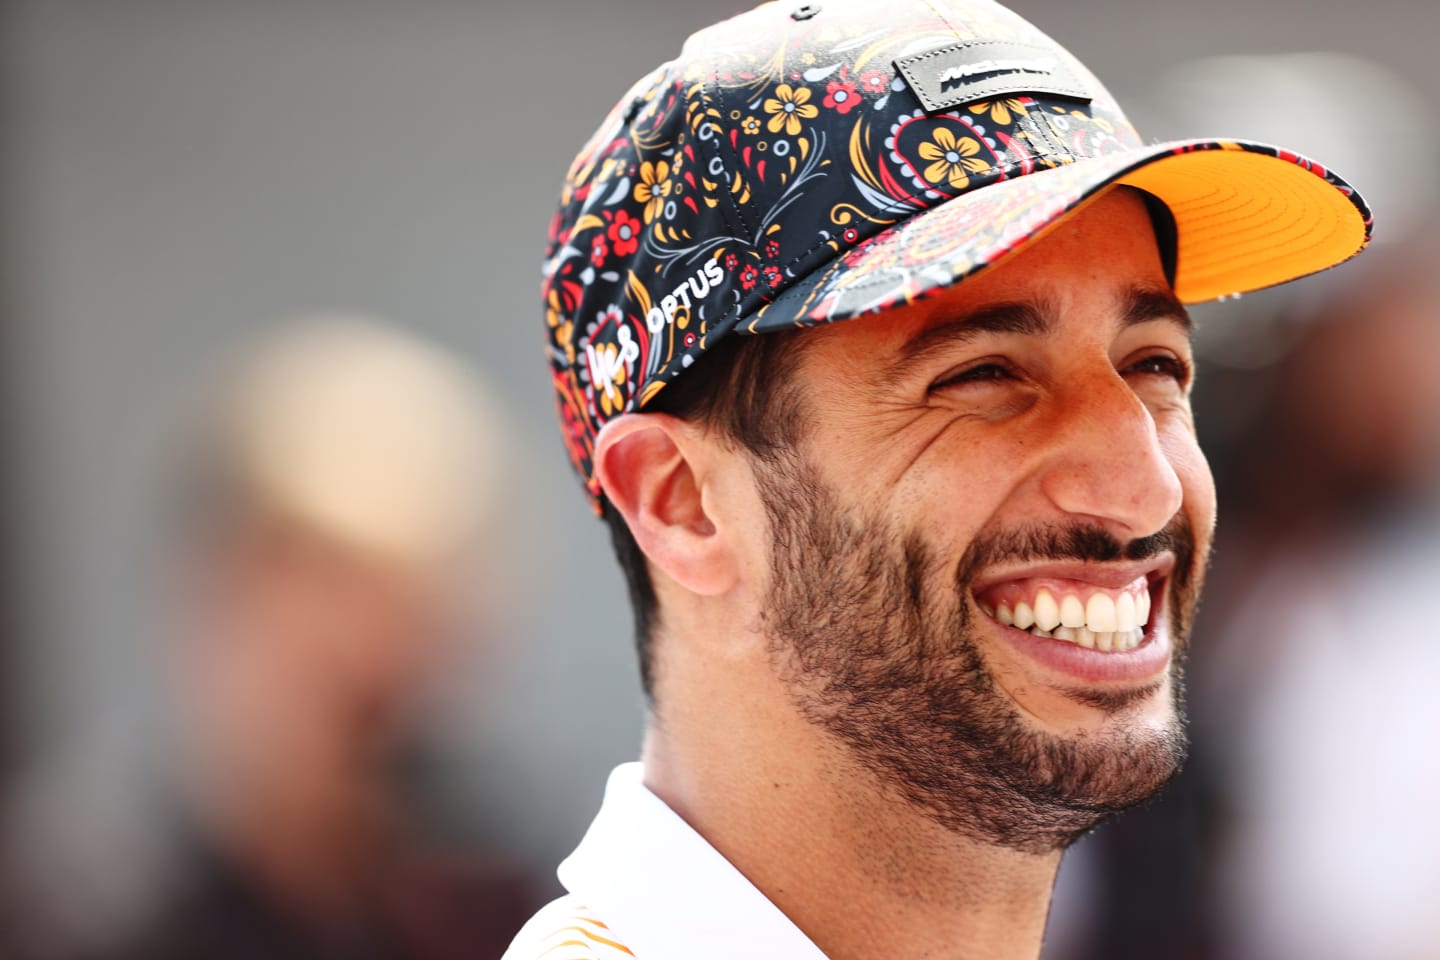 MEXICO CITY, MEXICO - NOVEMBER 04: Daniel Ricciardo of Australia and McLaren F1 looks on in the